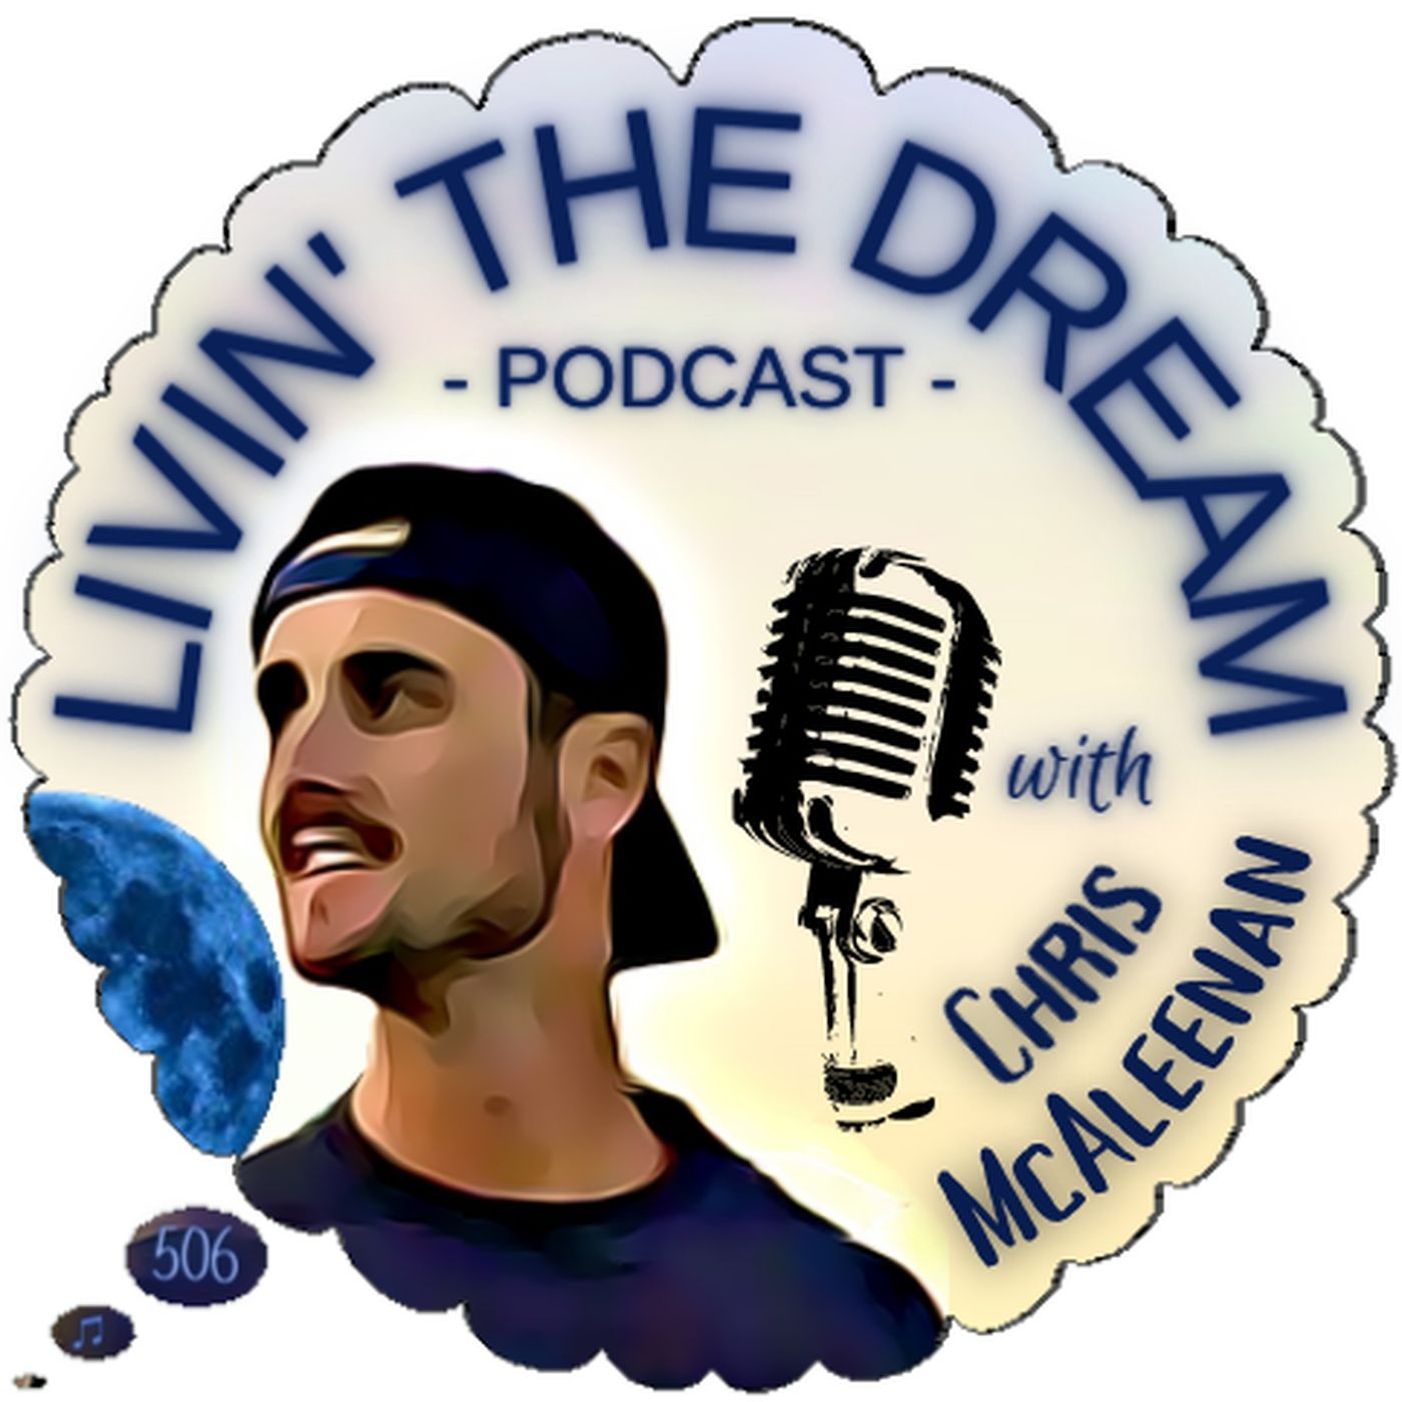 Livin' The Dream Podcast